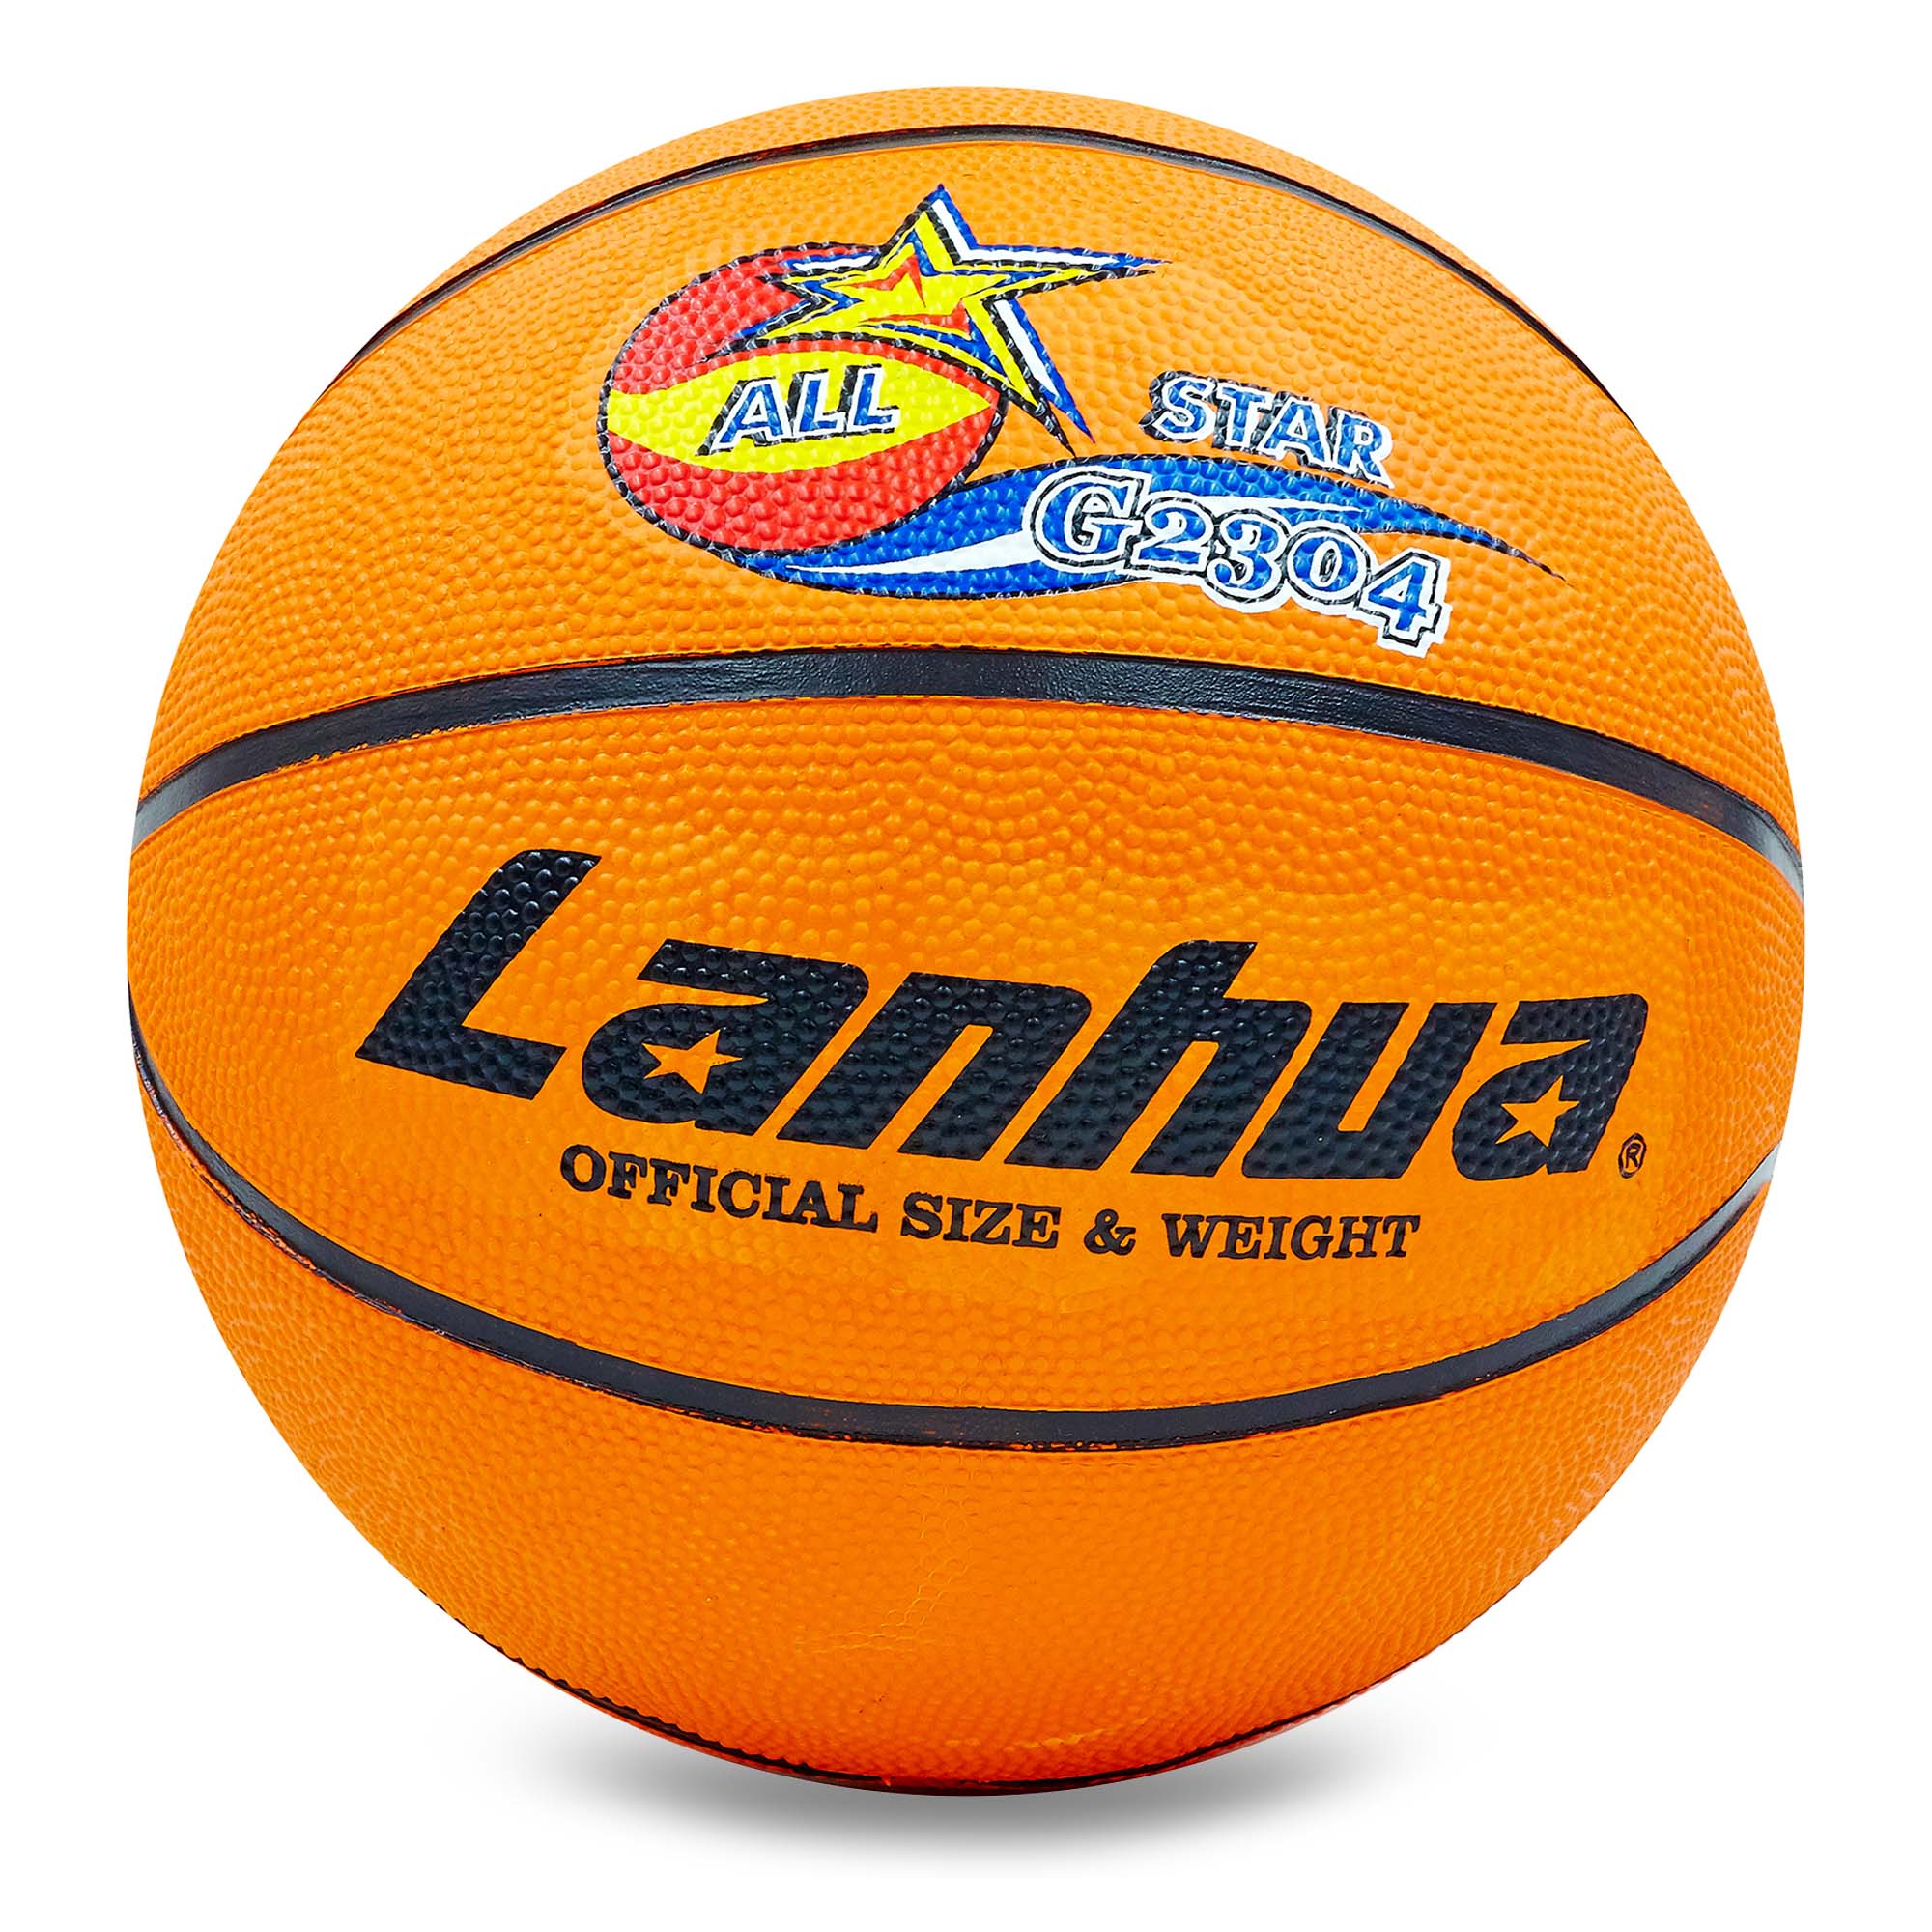 М'яч баскетбольний гумовий planeta-sport №7 LANHUA G2304 All star Помаранчевий